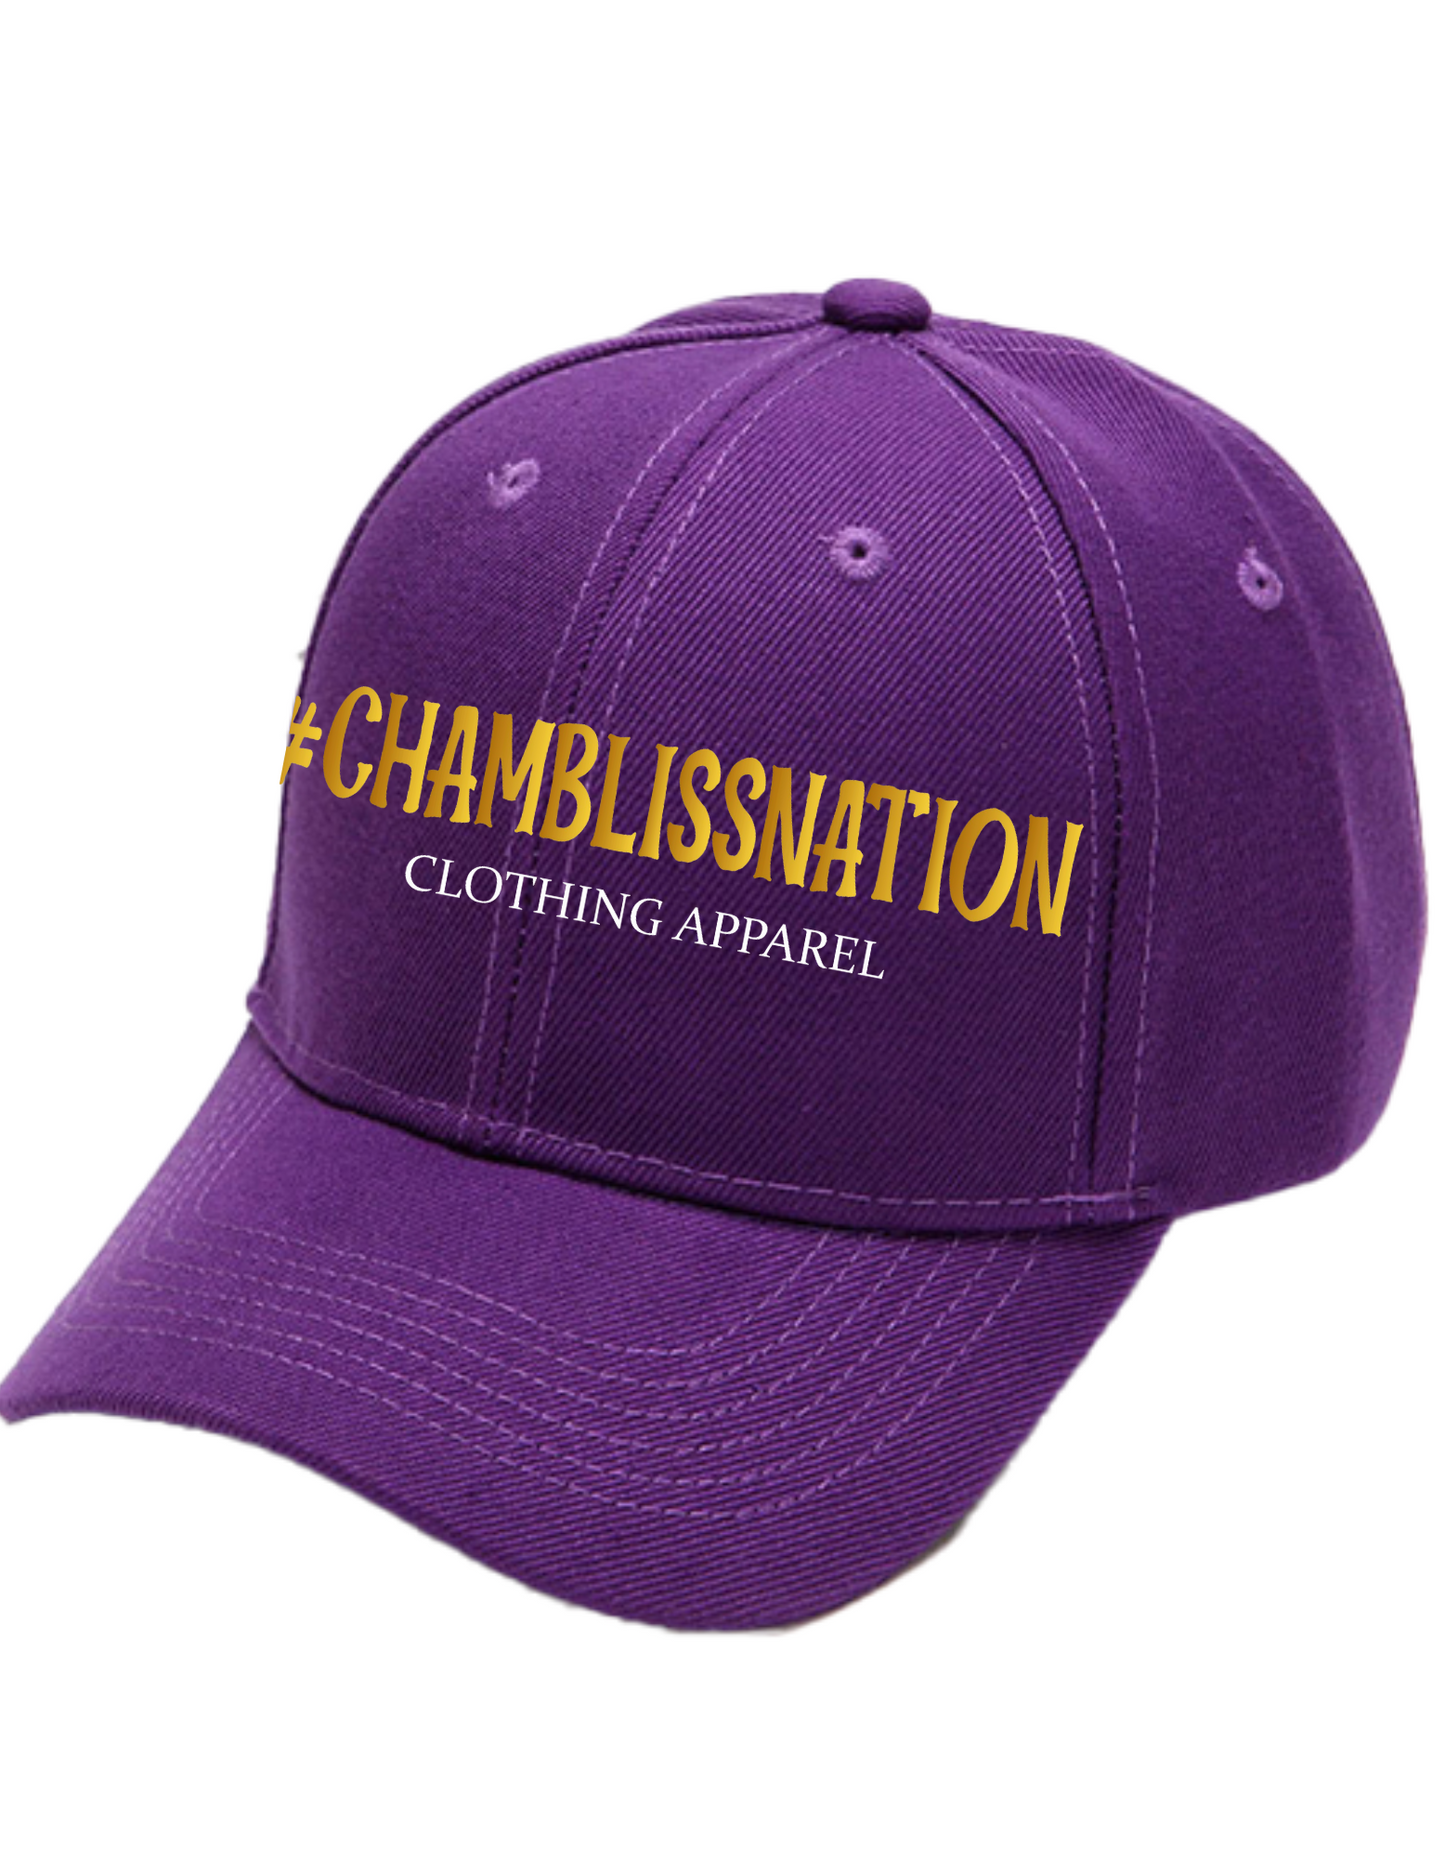 #Chamblisnation Clothing Apparel